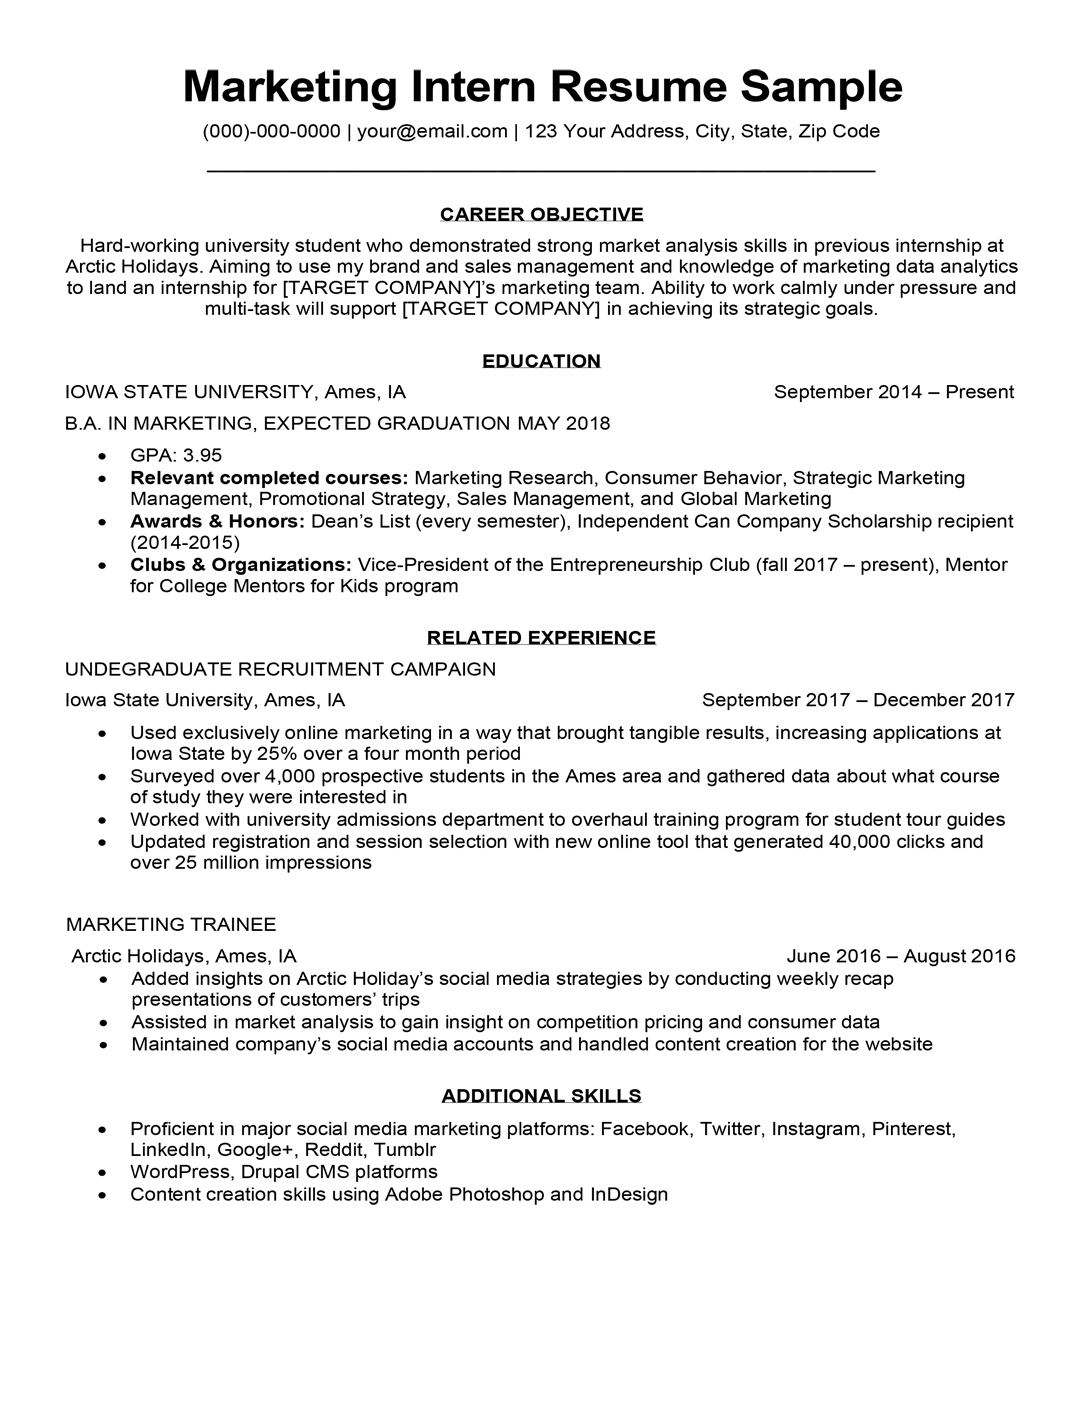 Marketing Intern resume sample